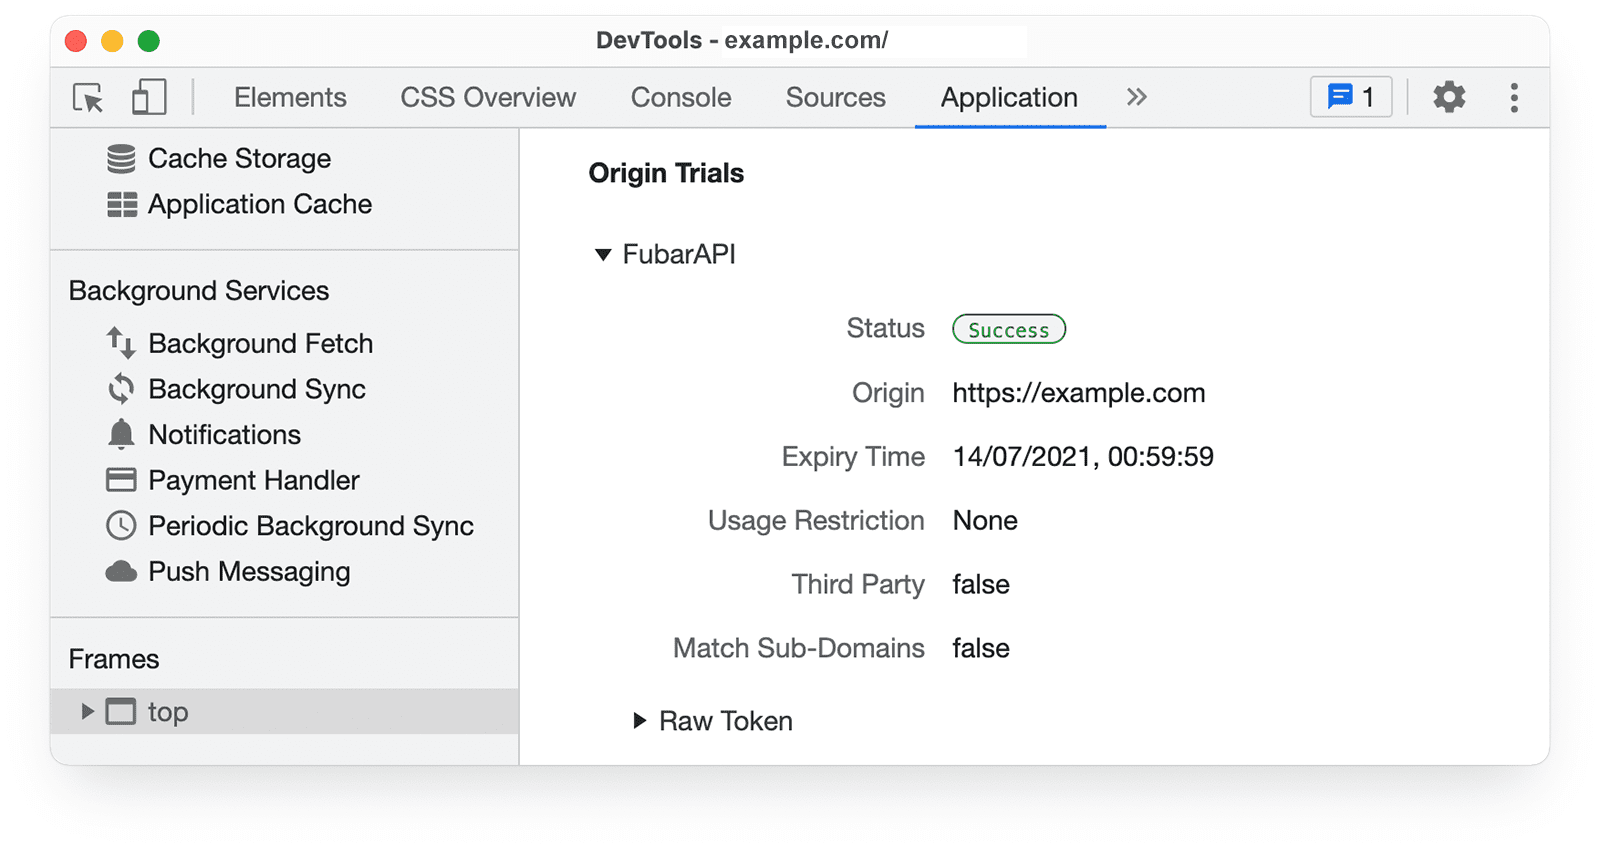 Chrome DevTools 
origin trials information in the Application panel.